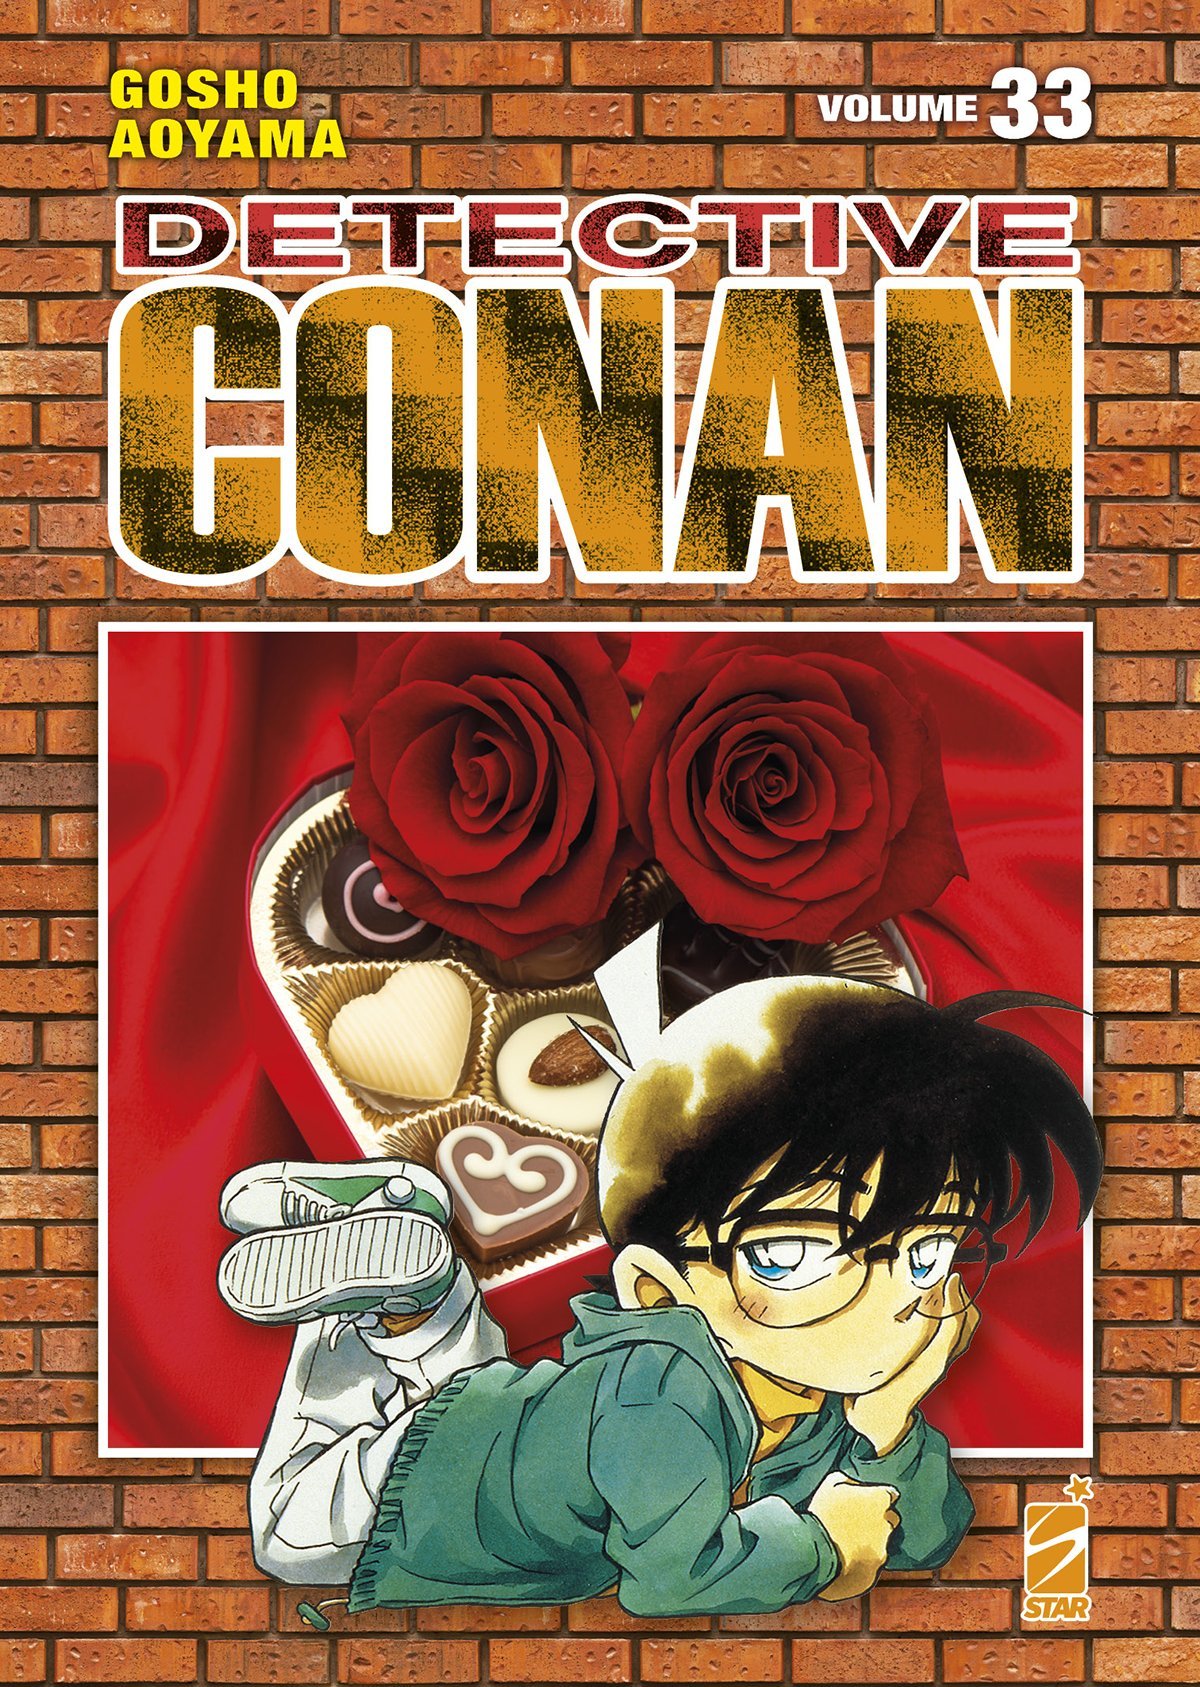 DETECTIVE CONAN NEW EDITION 33 - Star Comics - Shonen - G